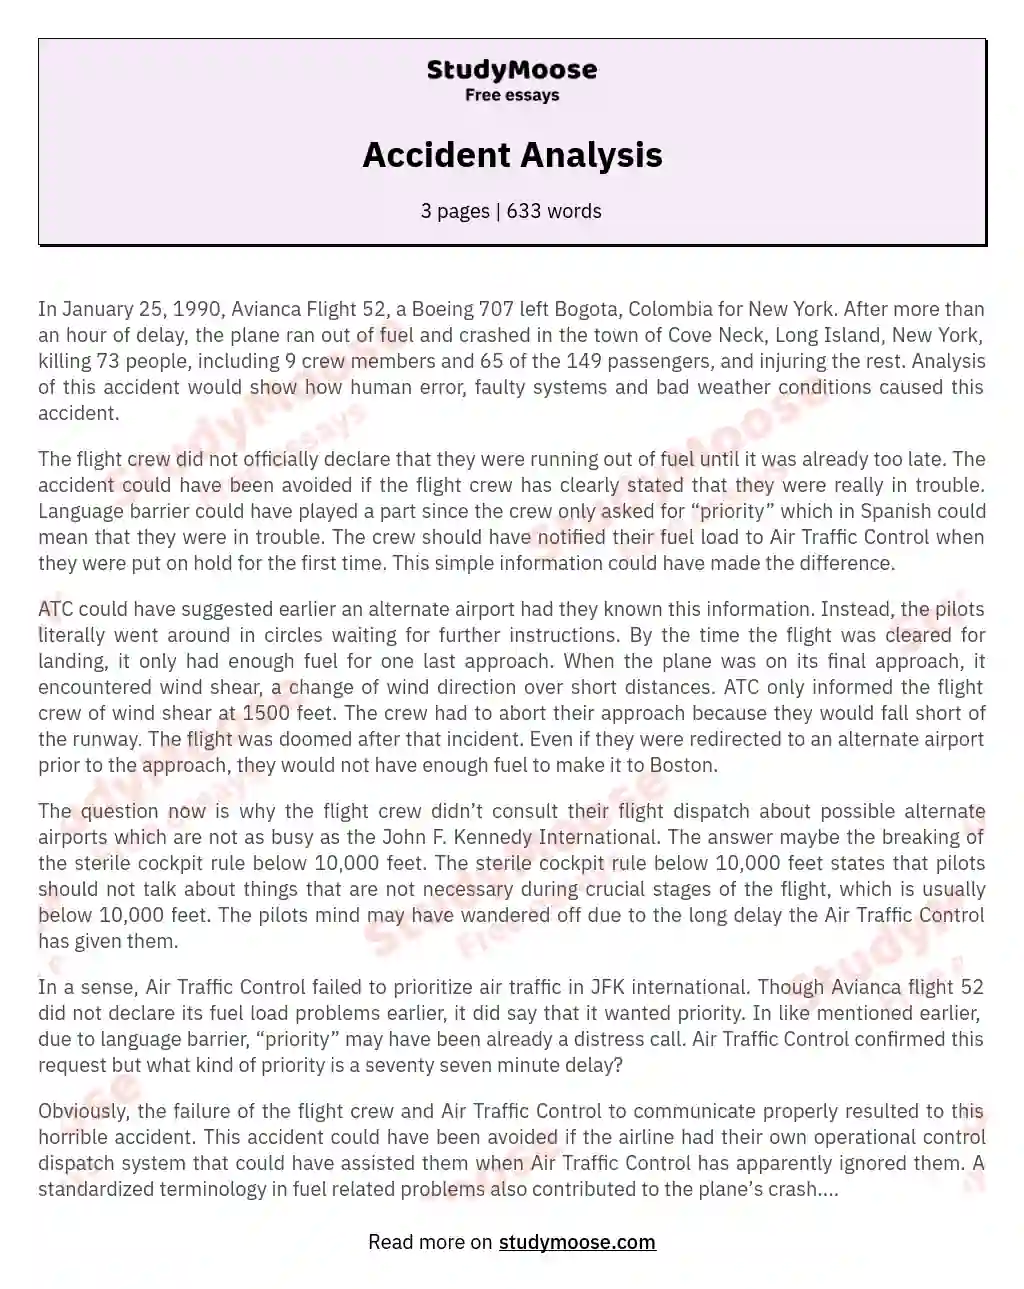 Accident Analysis essay